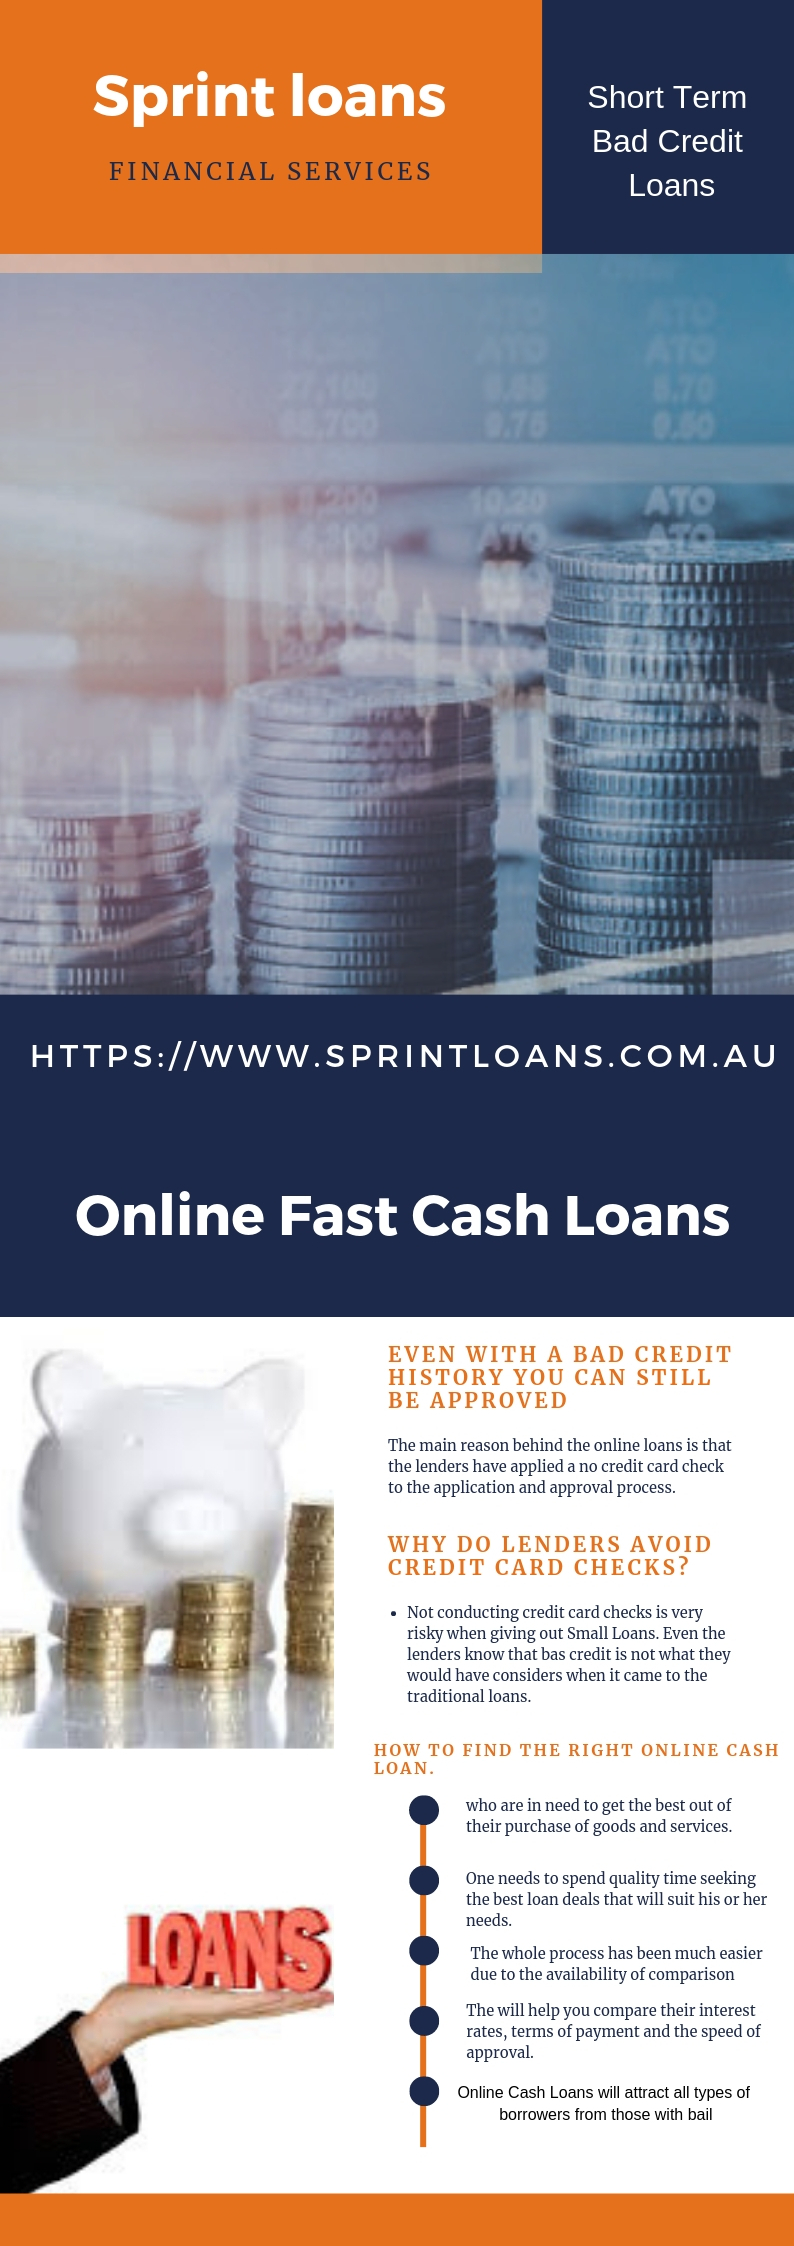 Sprint Loans Financial Loan Services.jpg  by Sprintloans